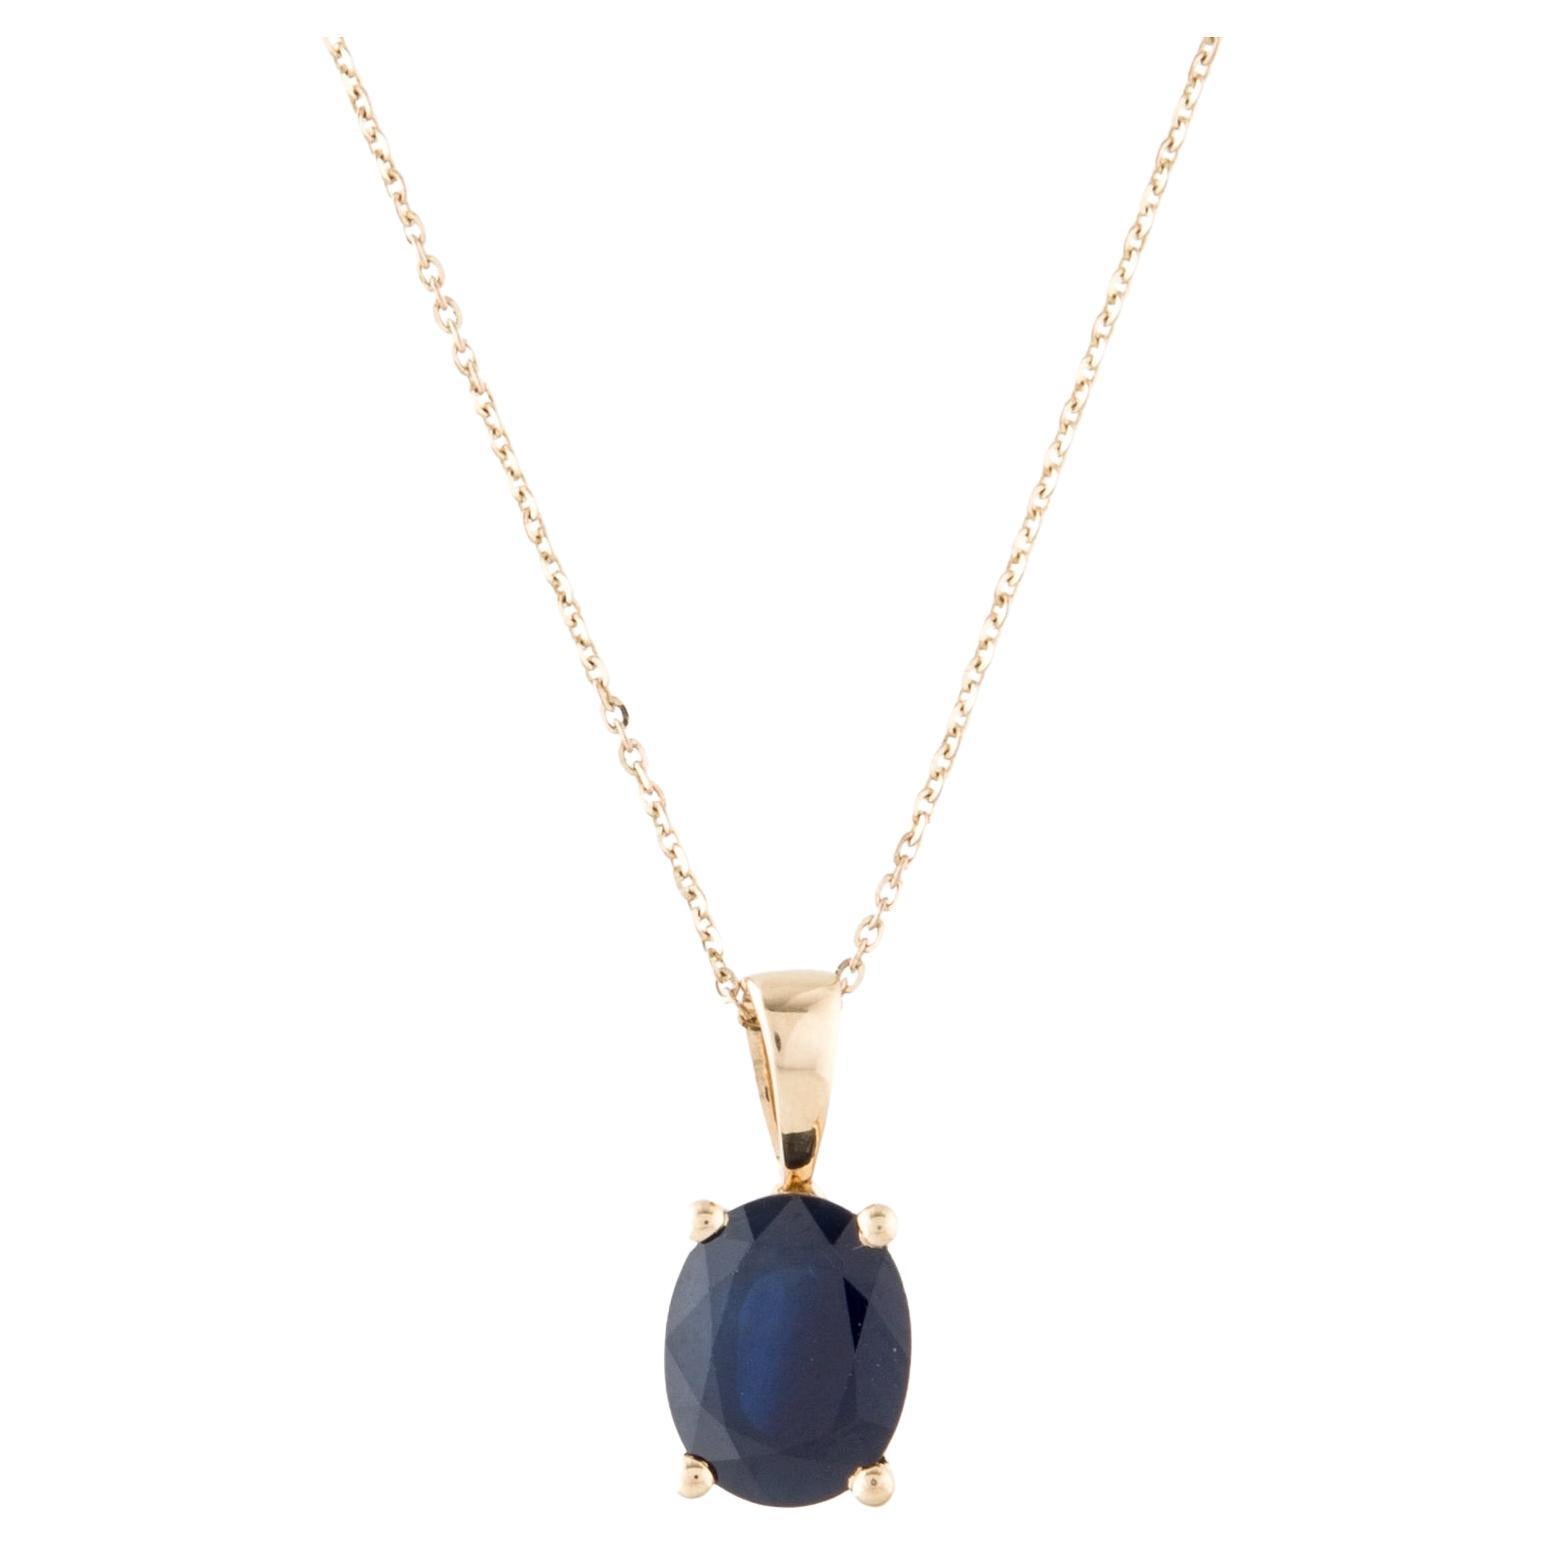 14K 2.91ct Sapphire Pendant Necklace: Elegant Luxury Statement Piece, Timeless